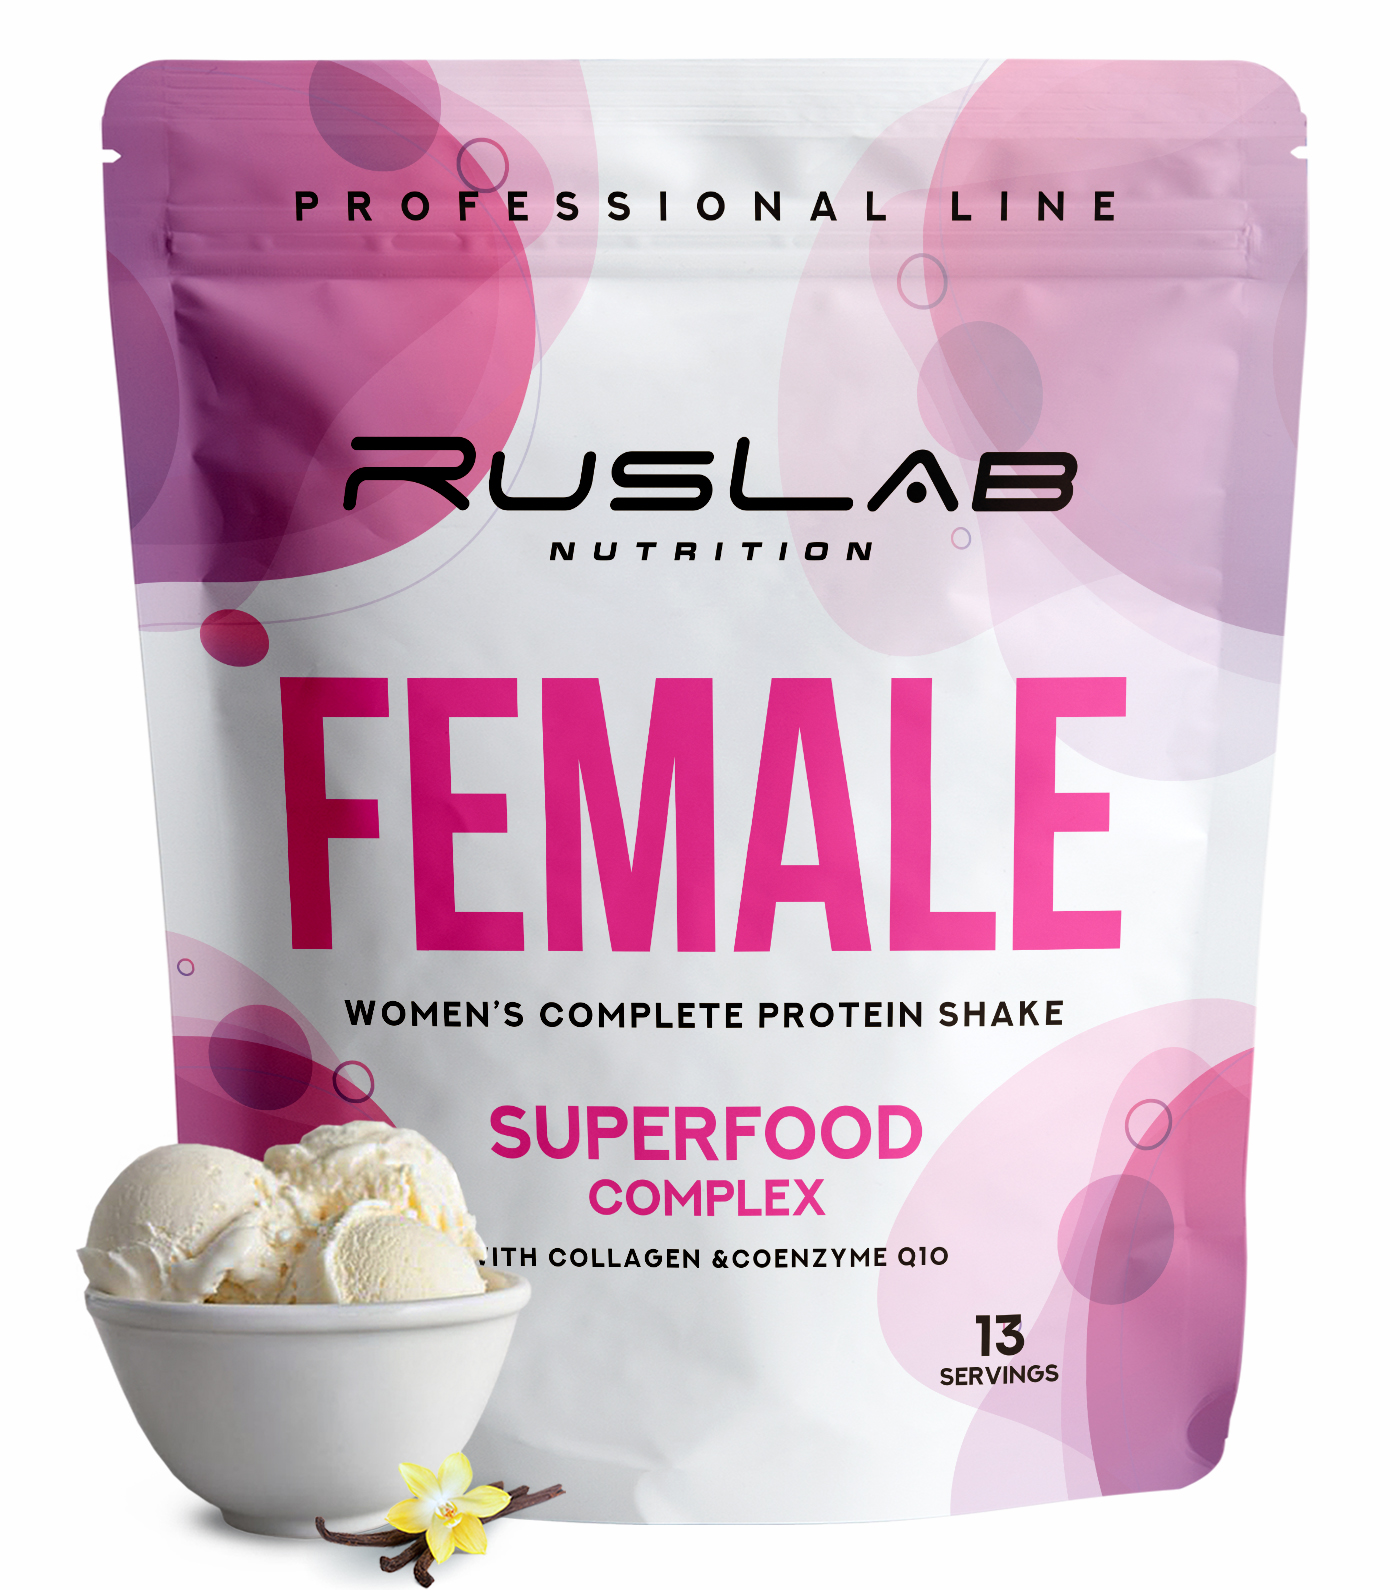 FEMALE Super Food Complex RusLabNutrition 416гр вкус ванильное мороженое